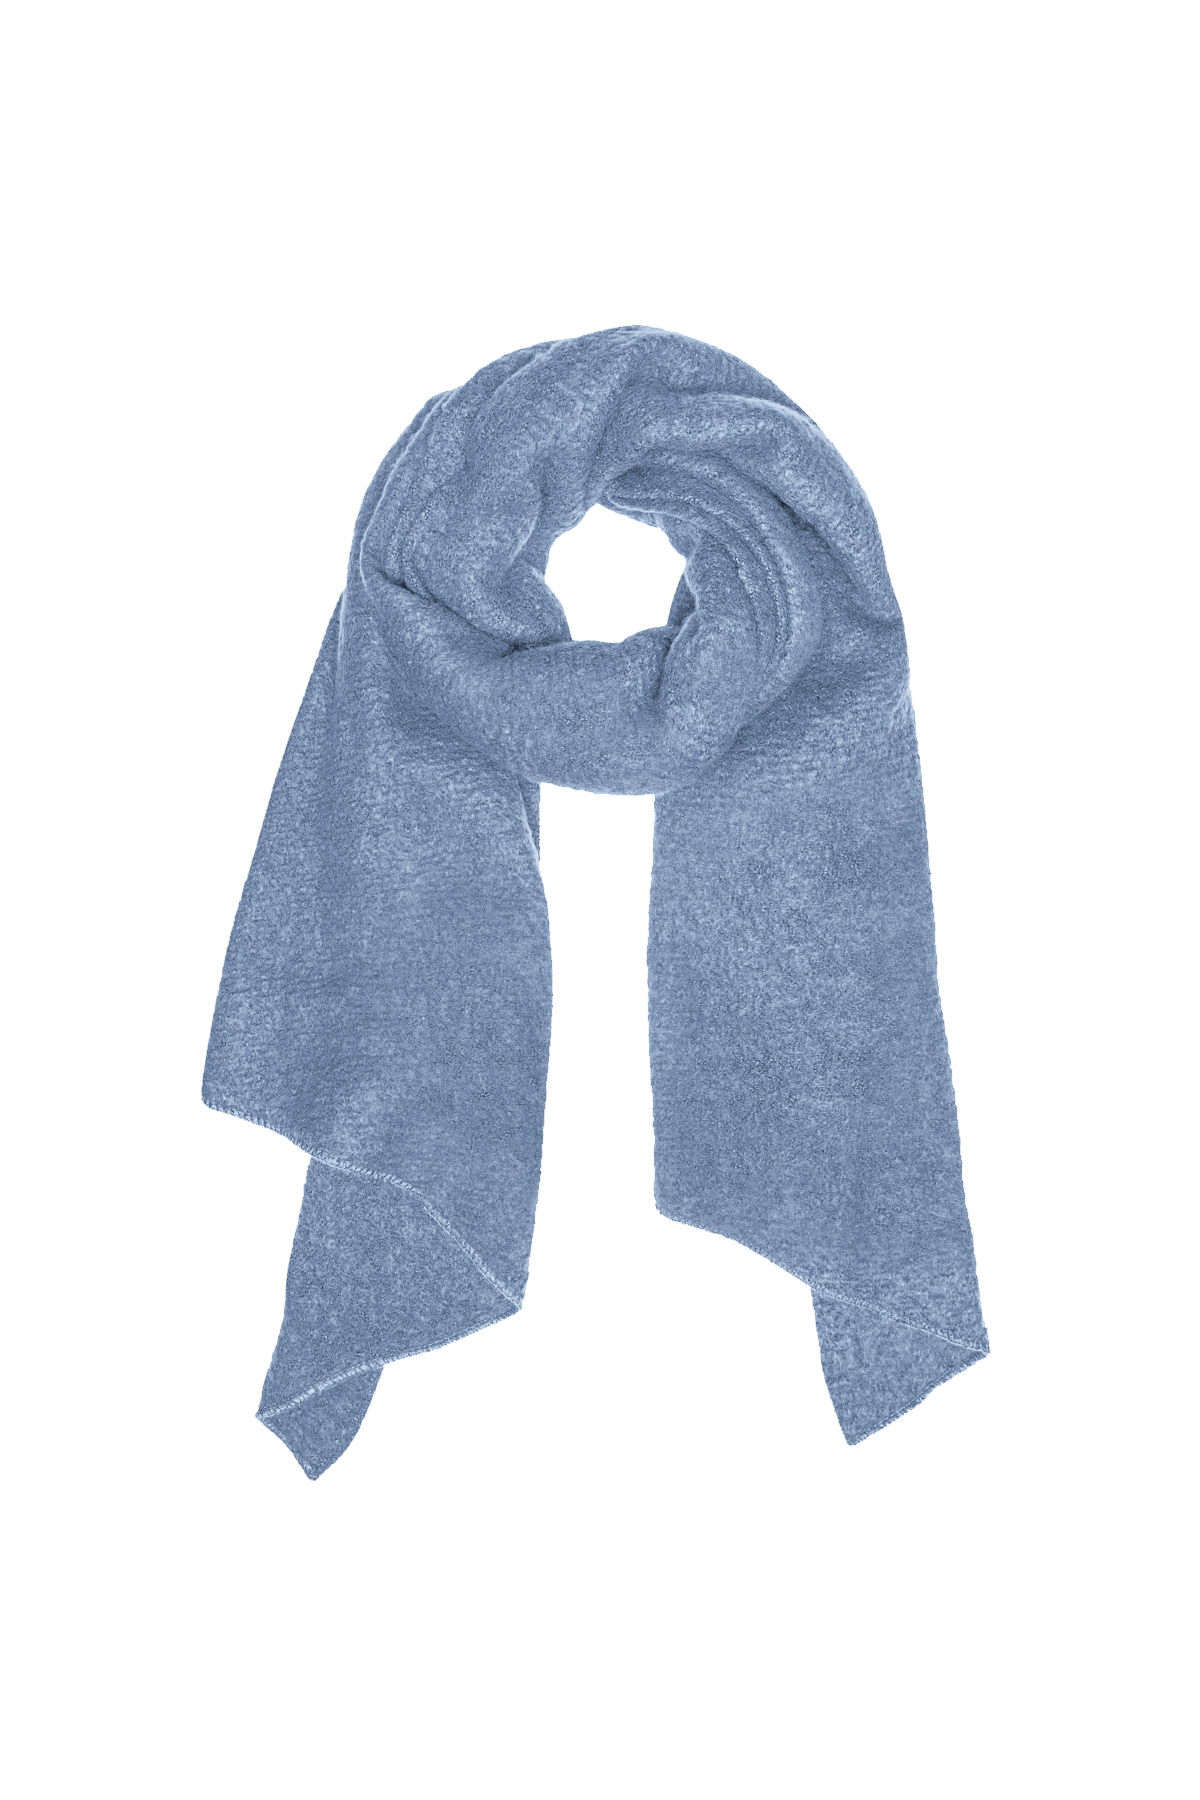 Soft winter scarf ocean blue Polyester h5 